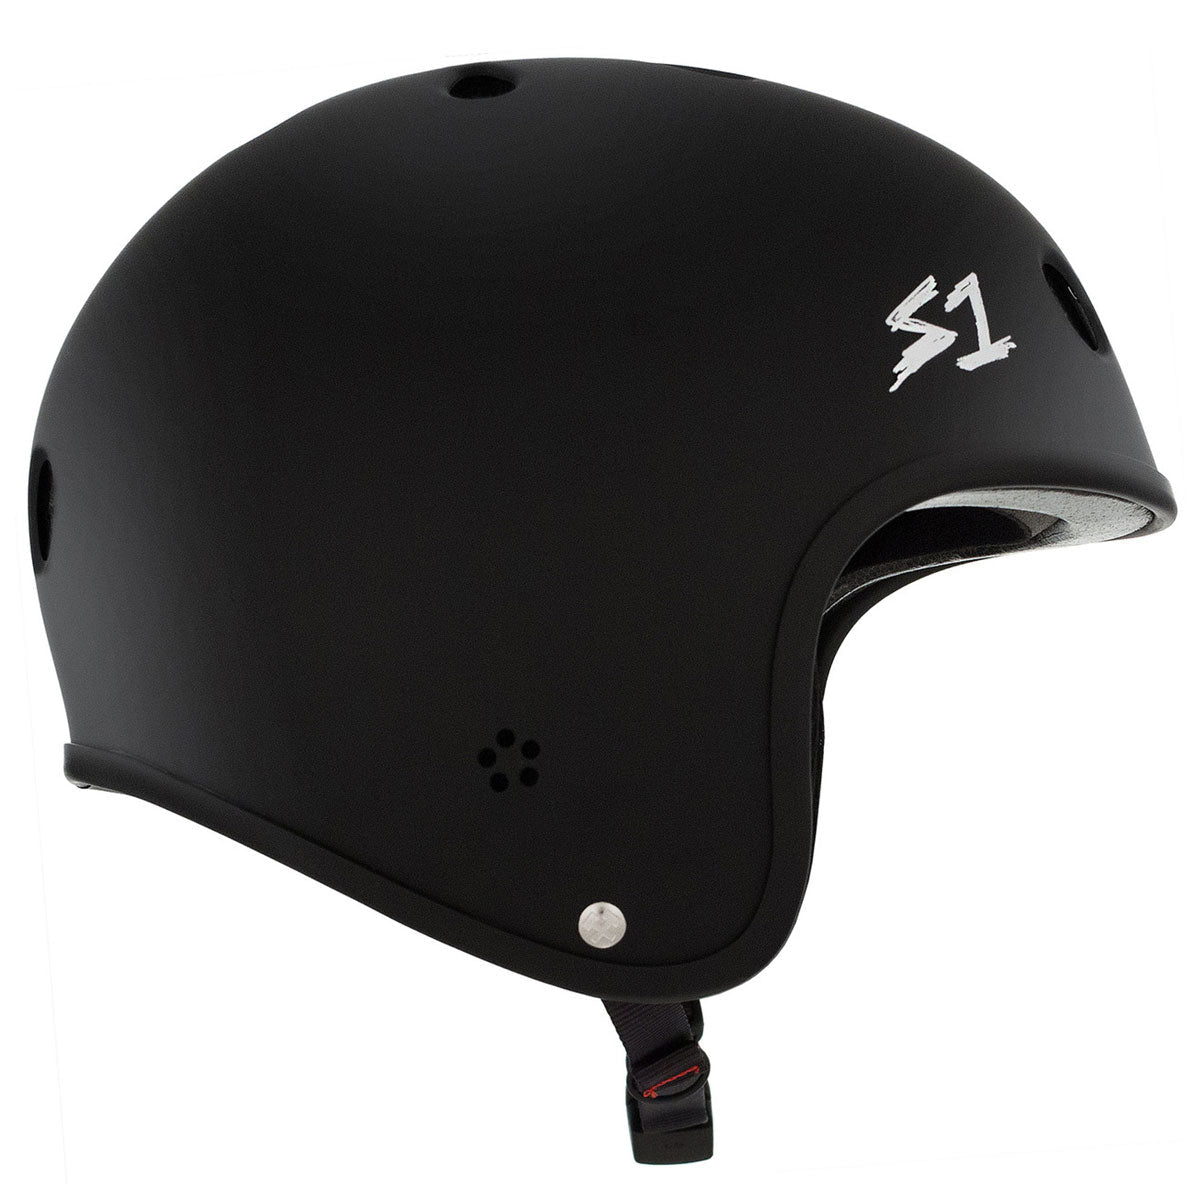 S-One Lifer Retro Helmet - Black Matte image 2